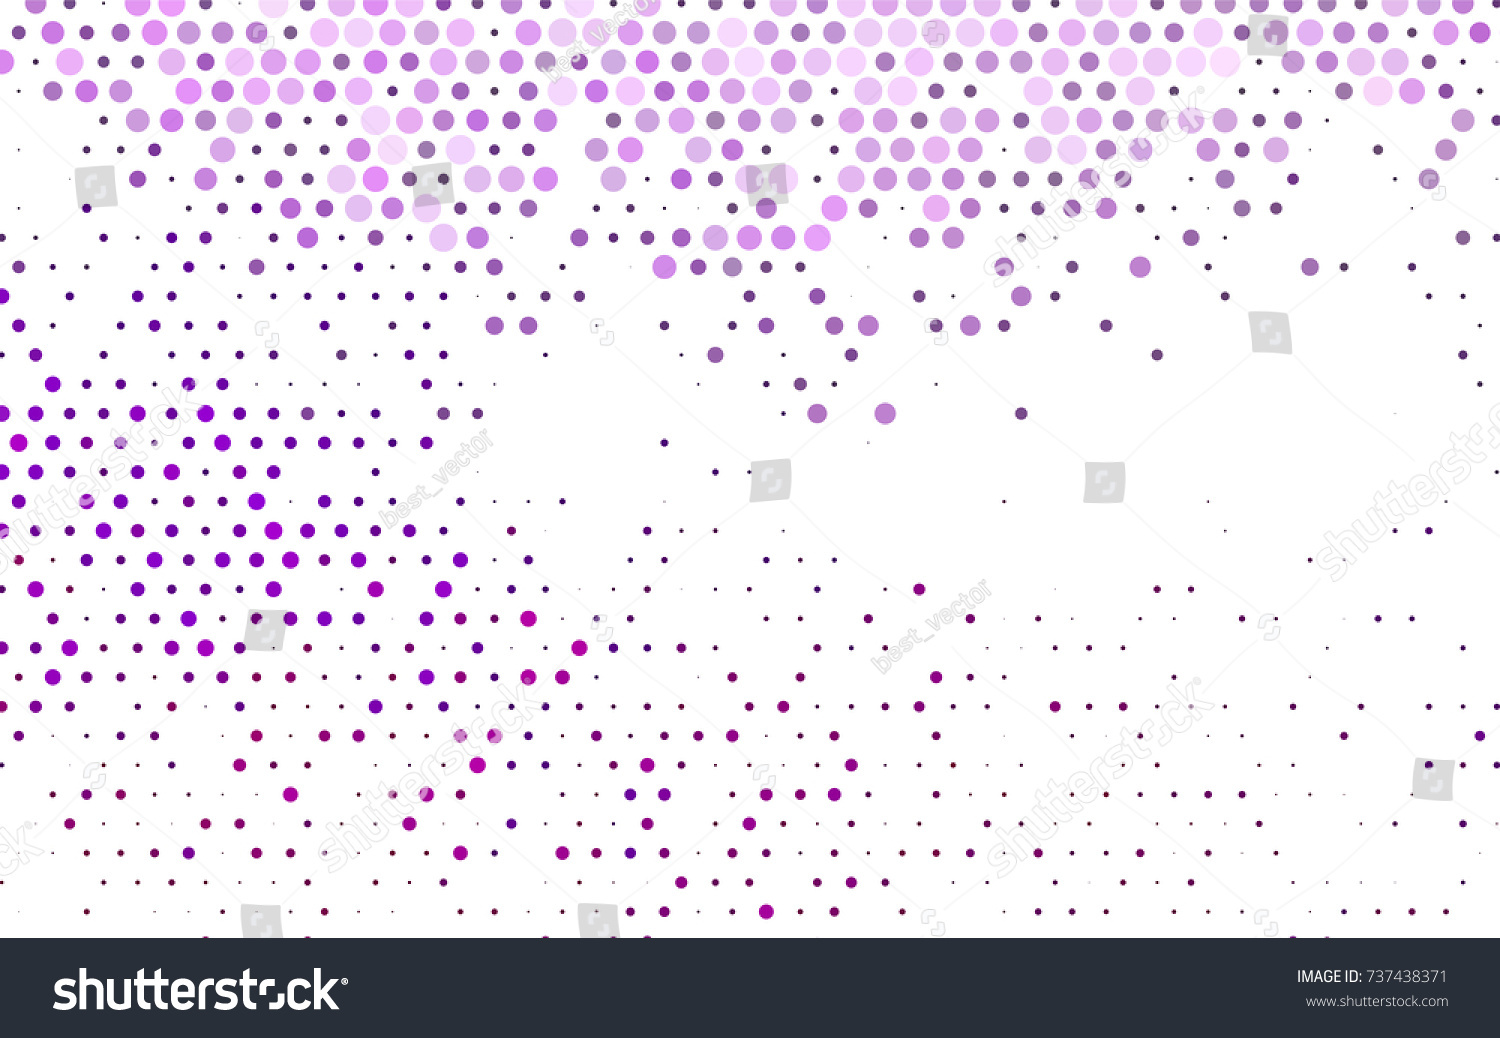 Purple dots background Images, Stock Photos & Vectors | Shutterstock